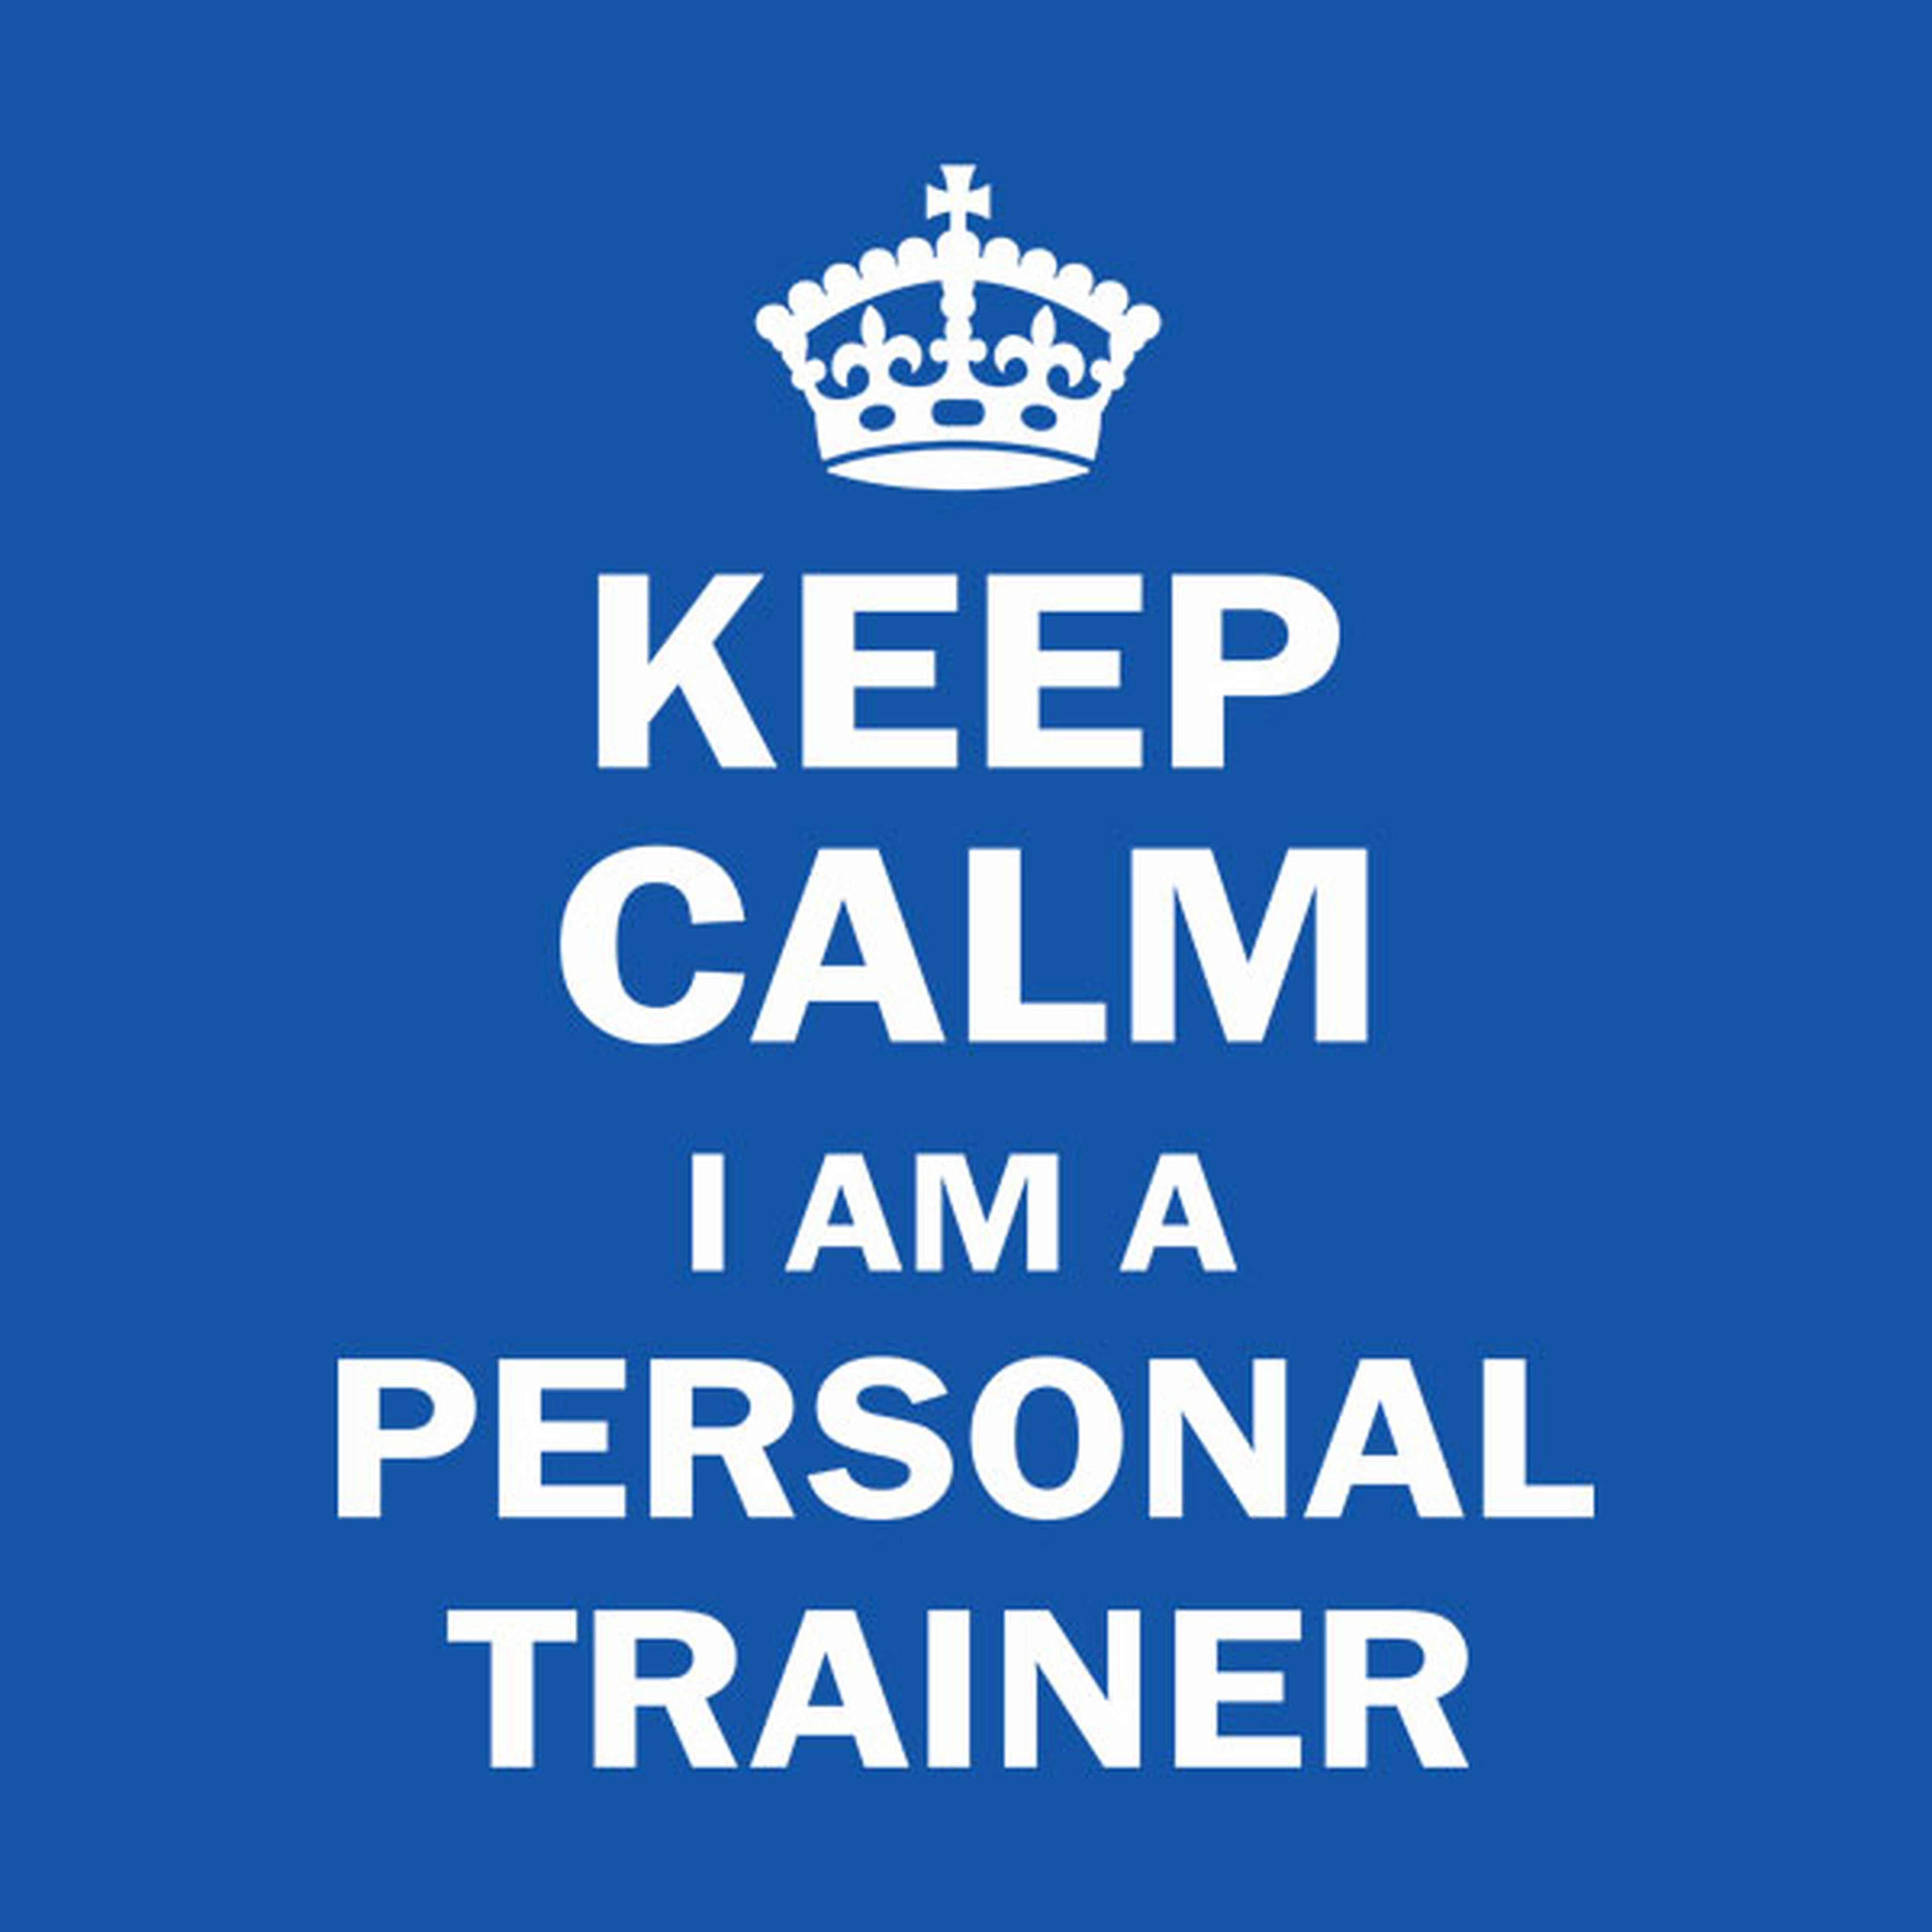 Keep calm. I am a personal trainer T-shirt